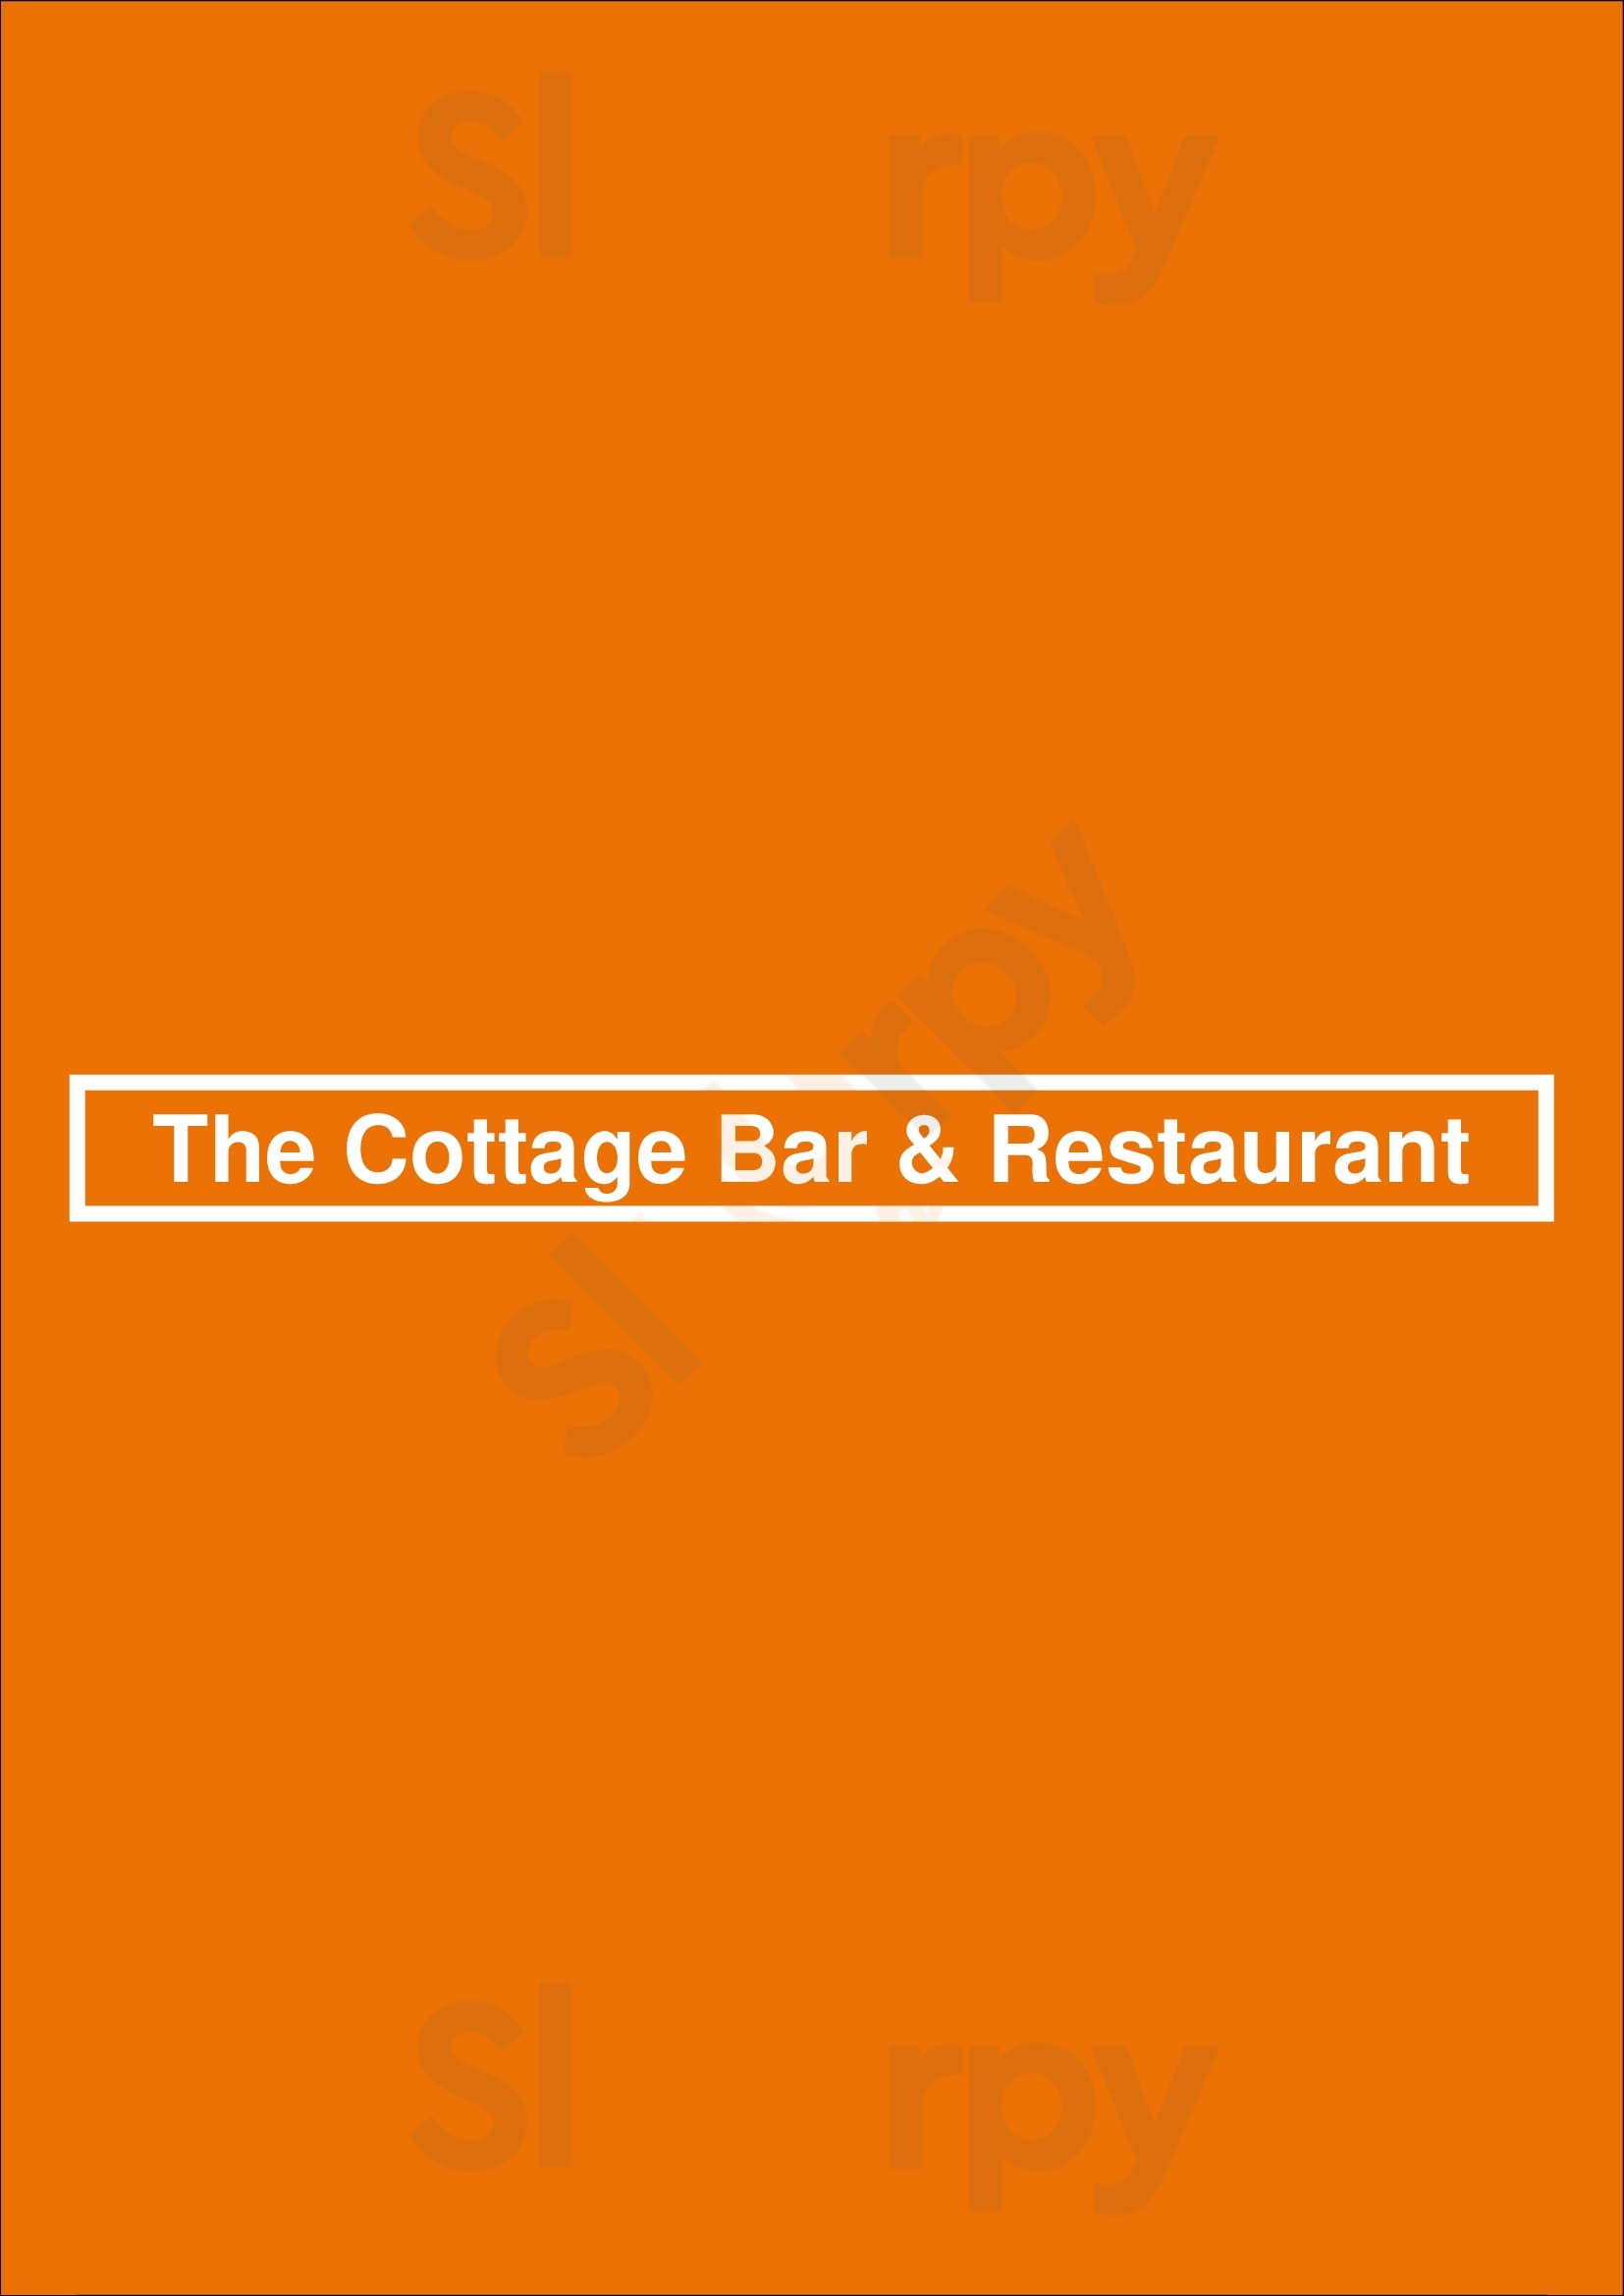 The Cottage Bar & Restaurant Grand Rapids Menu - 1